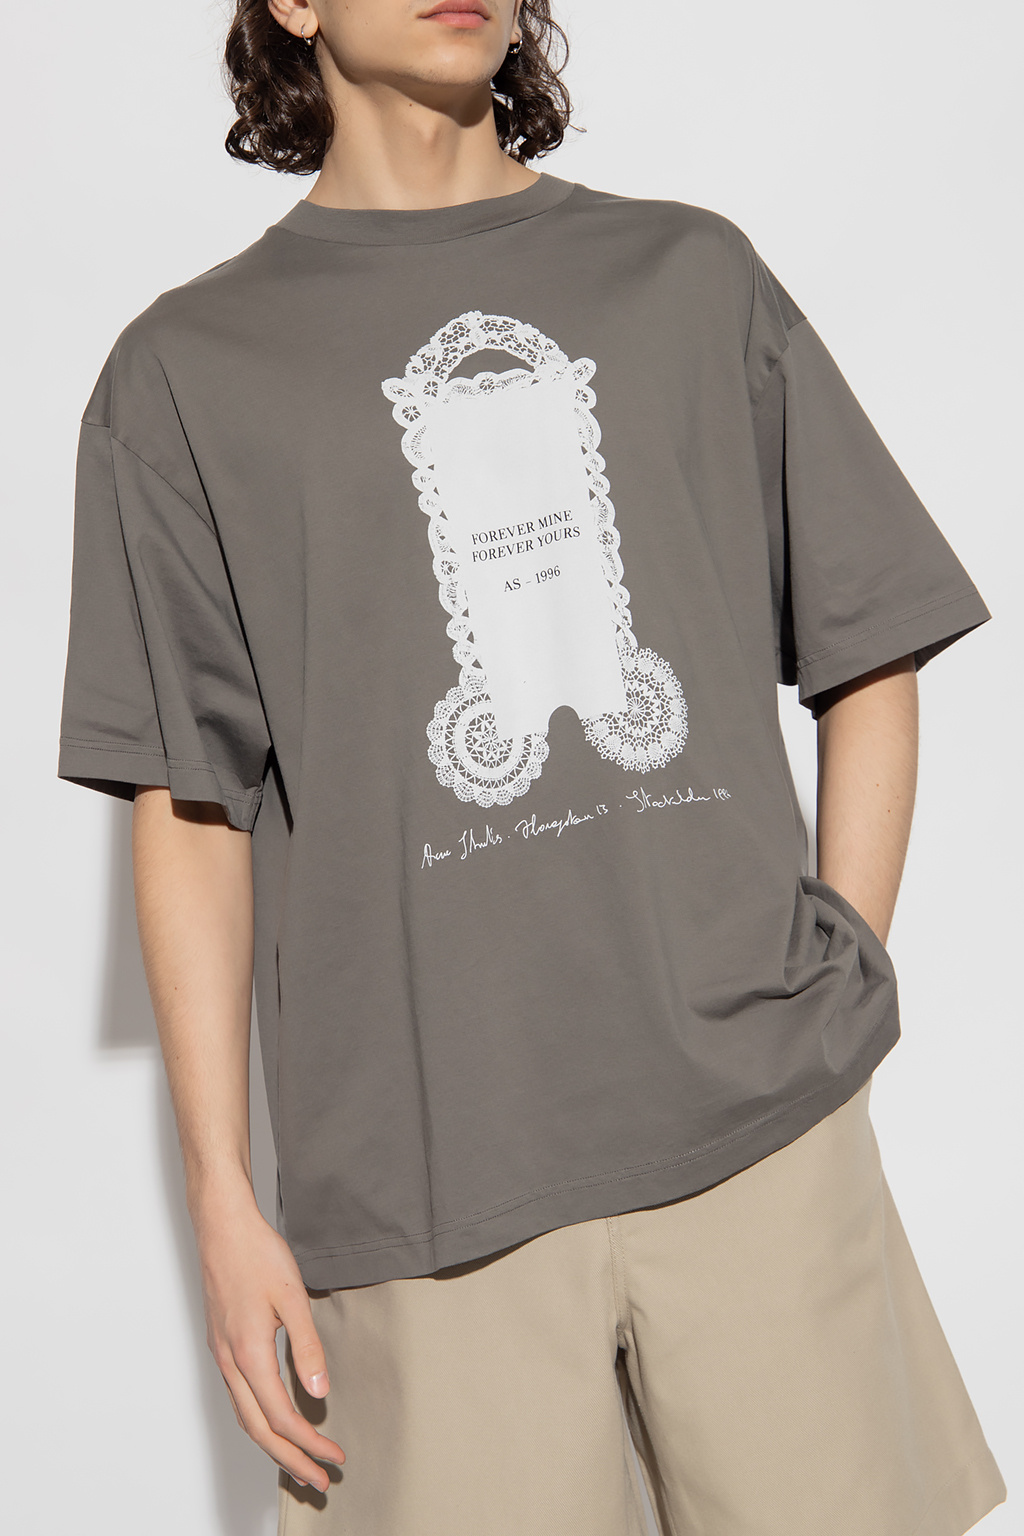 Blackie Fn - Louis Vuitton T-Shirt Size: S - XXL Price